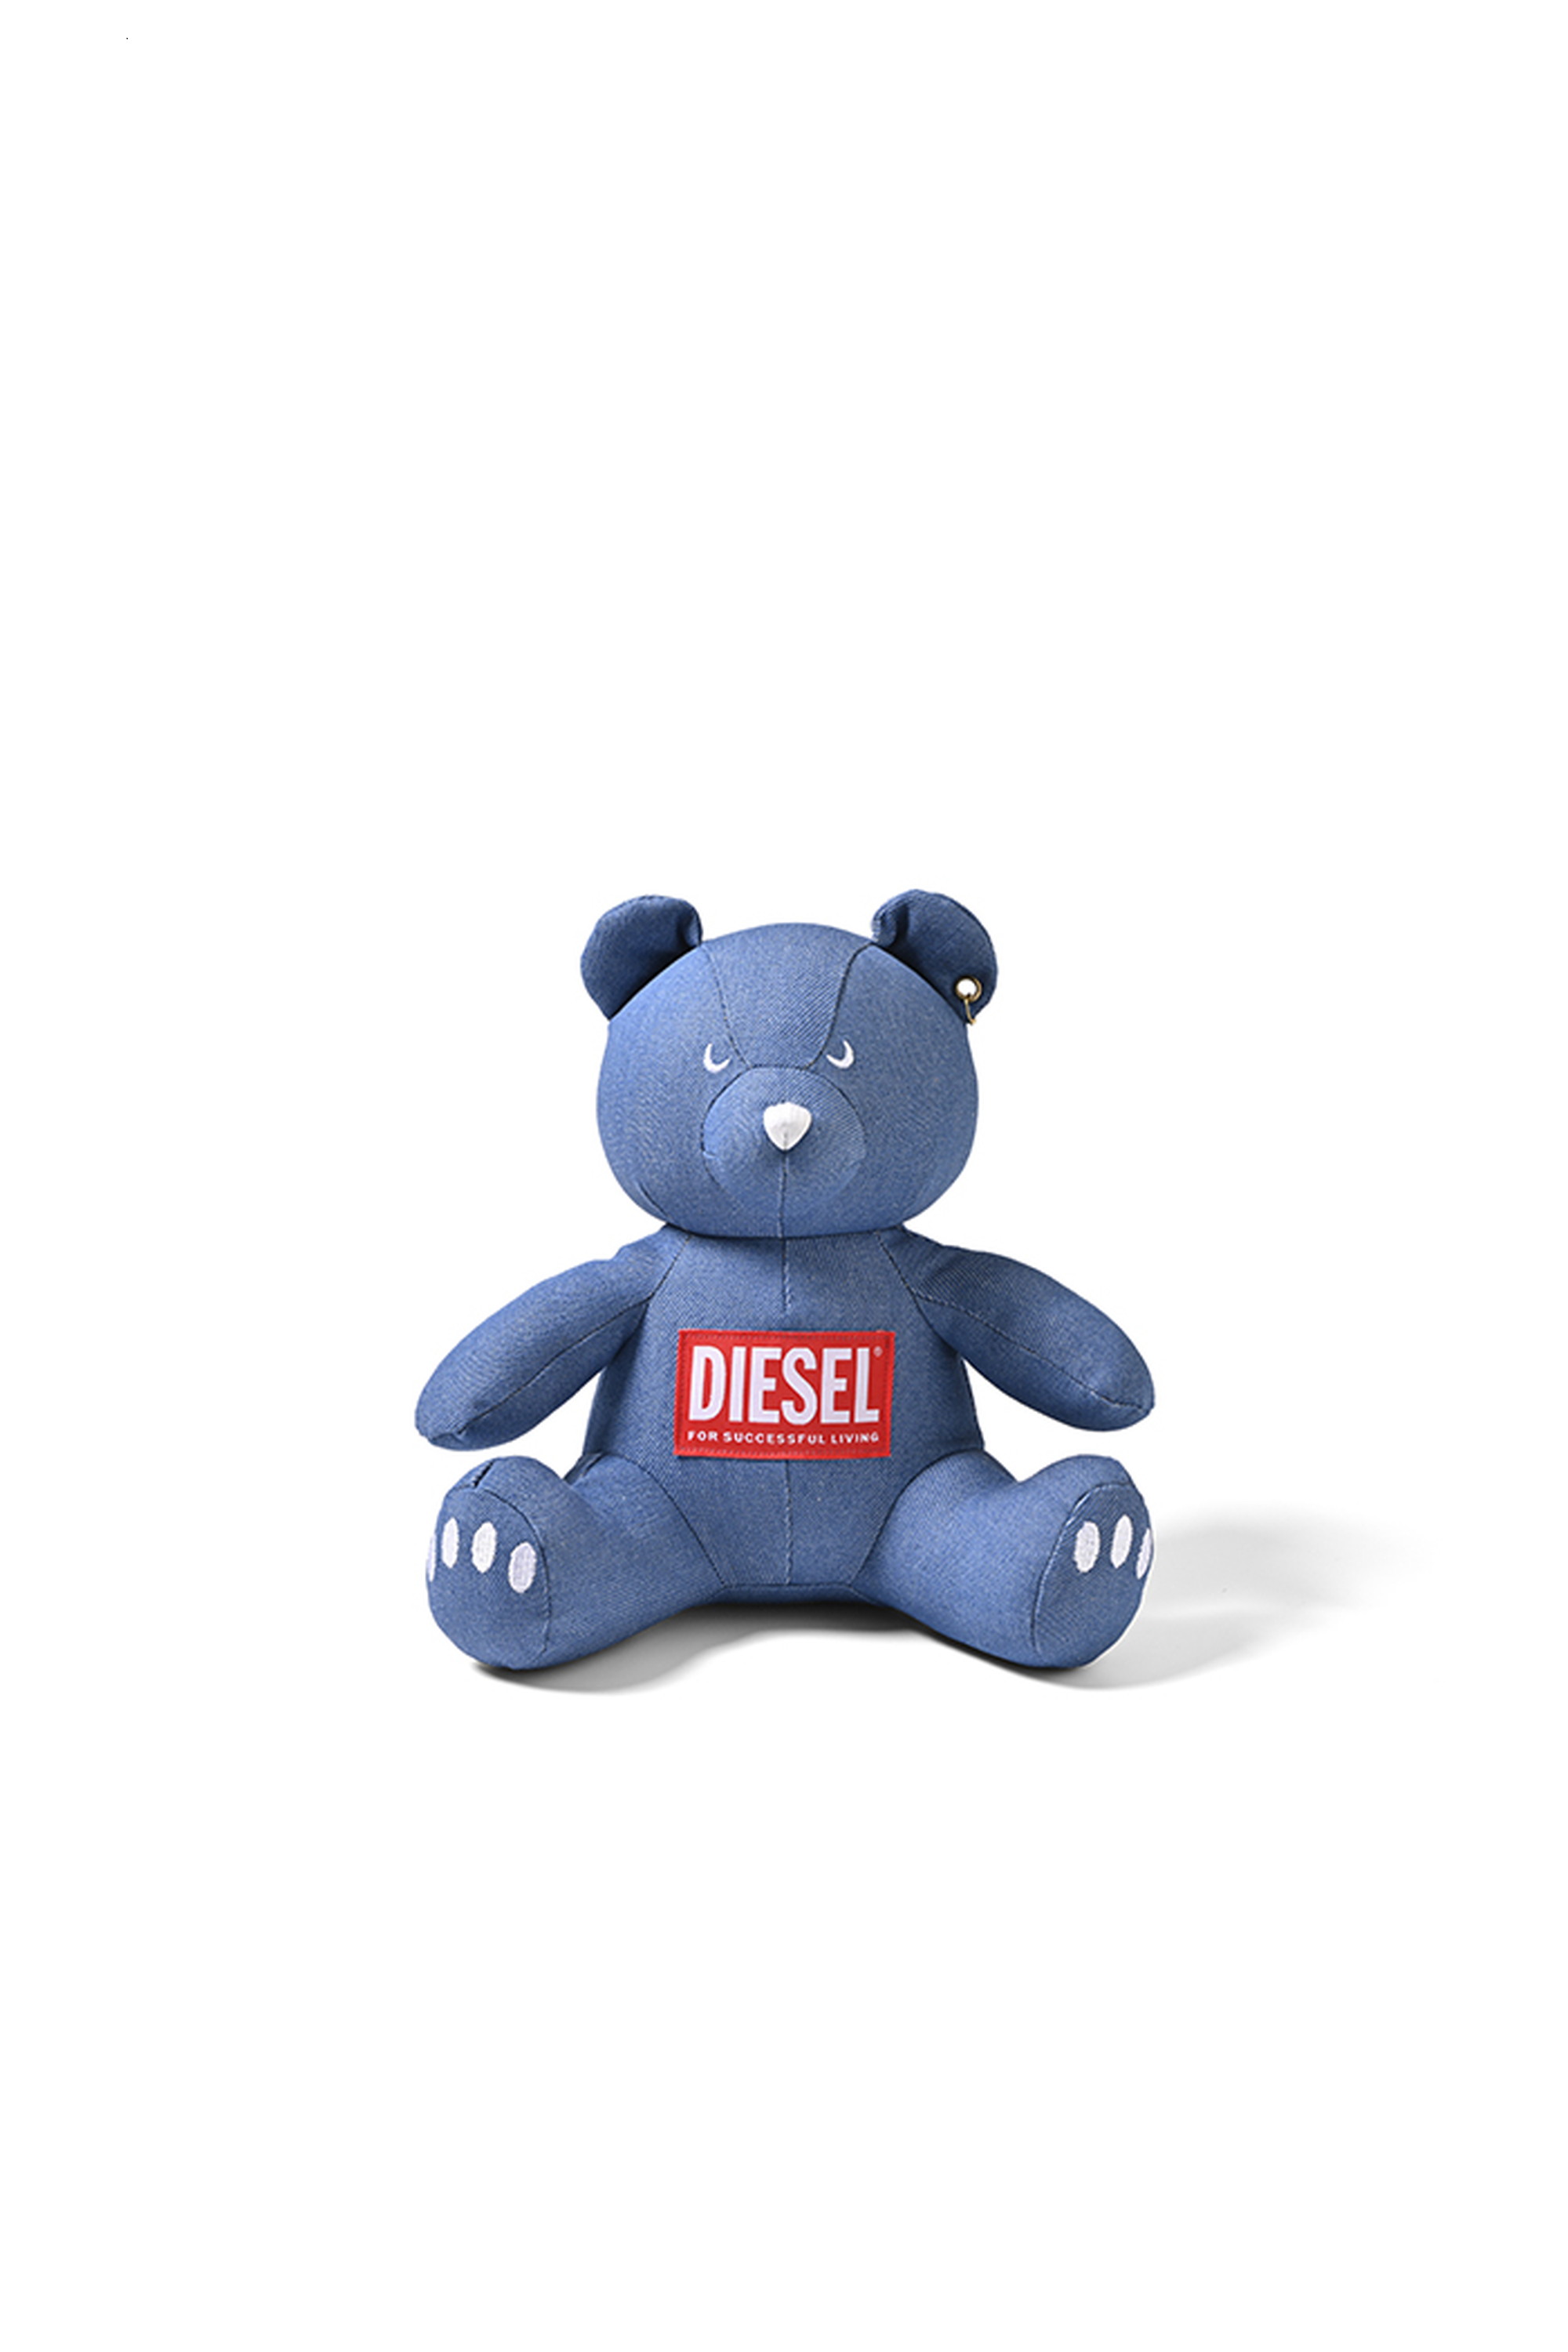 Diesel - DIESEL BEAR (LIGHT BLUE), LIGHT BLUE・UNI - Image 1